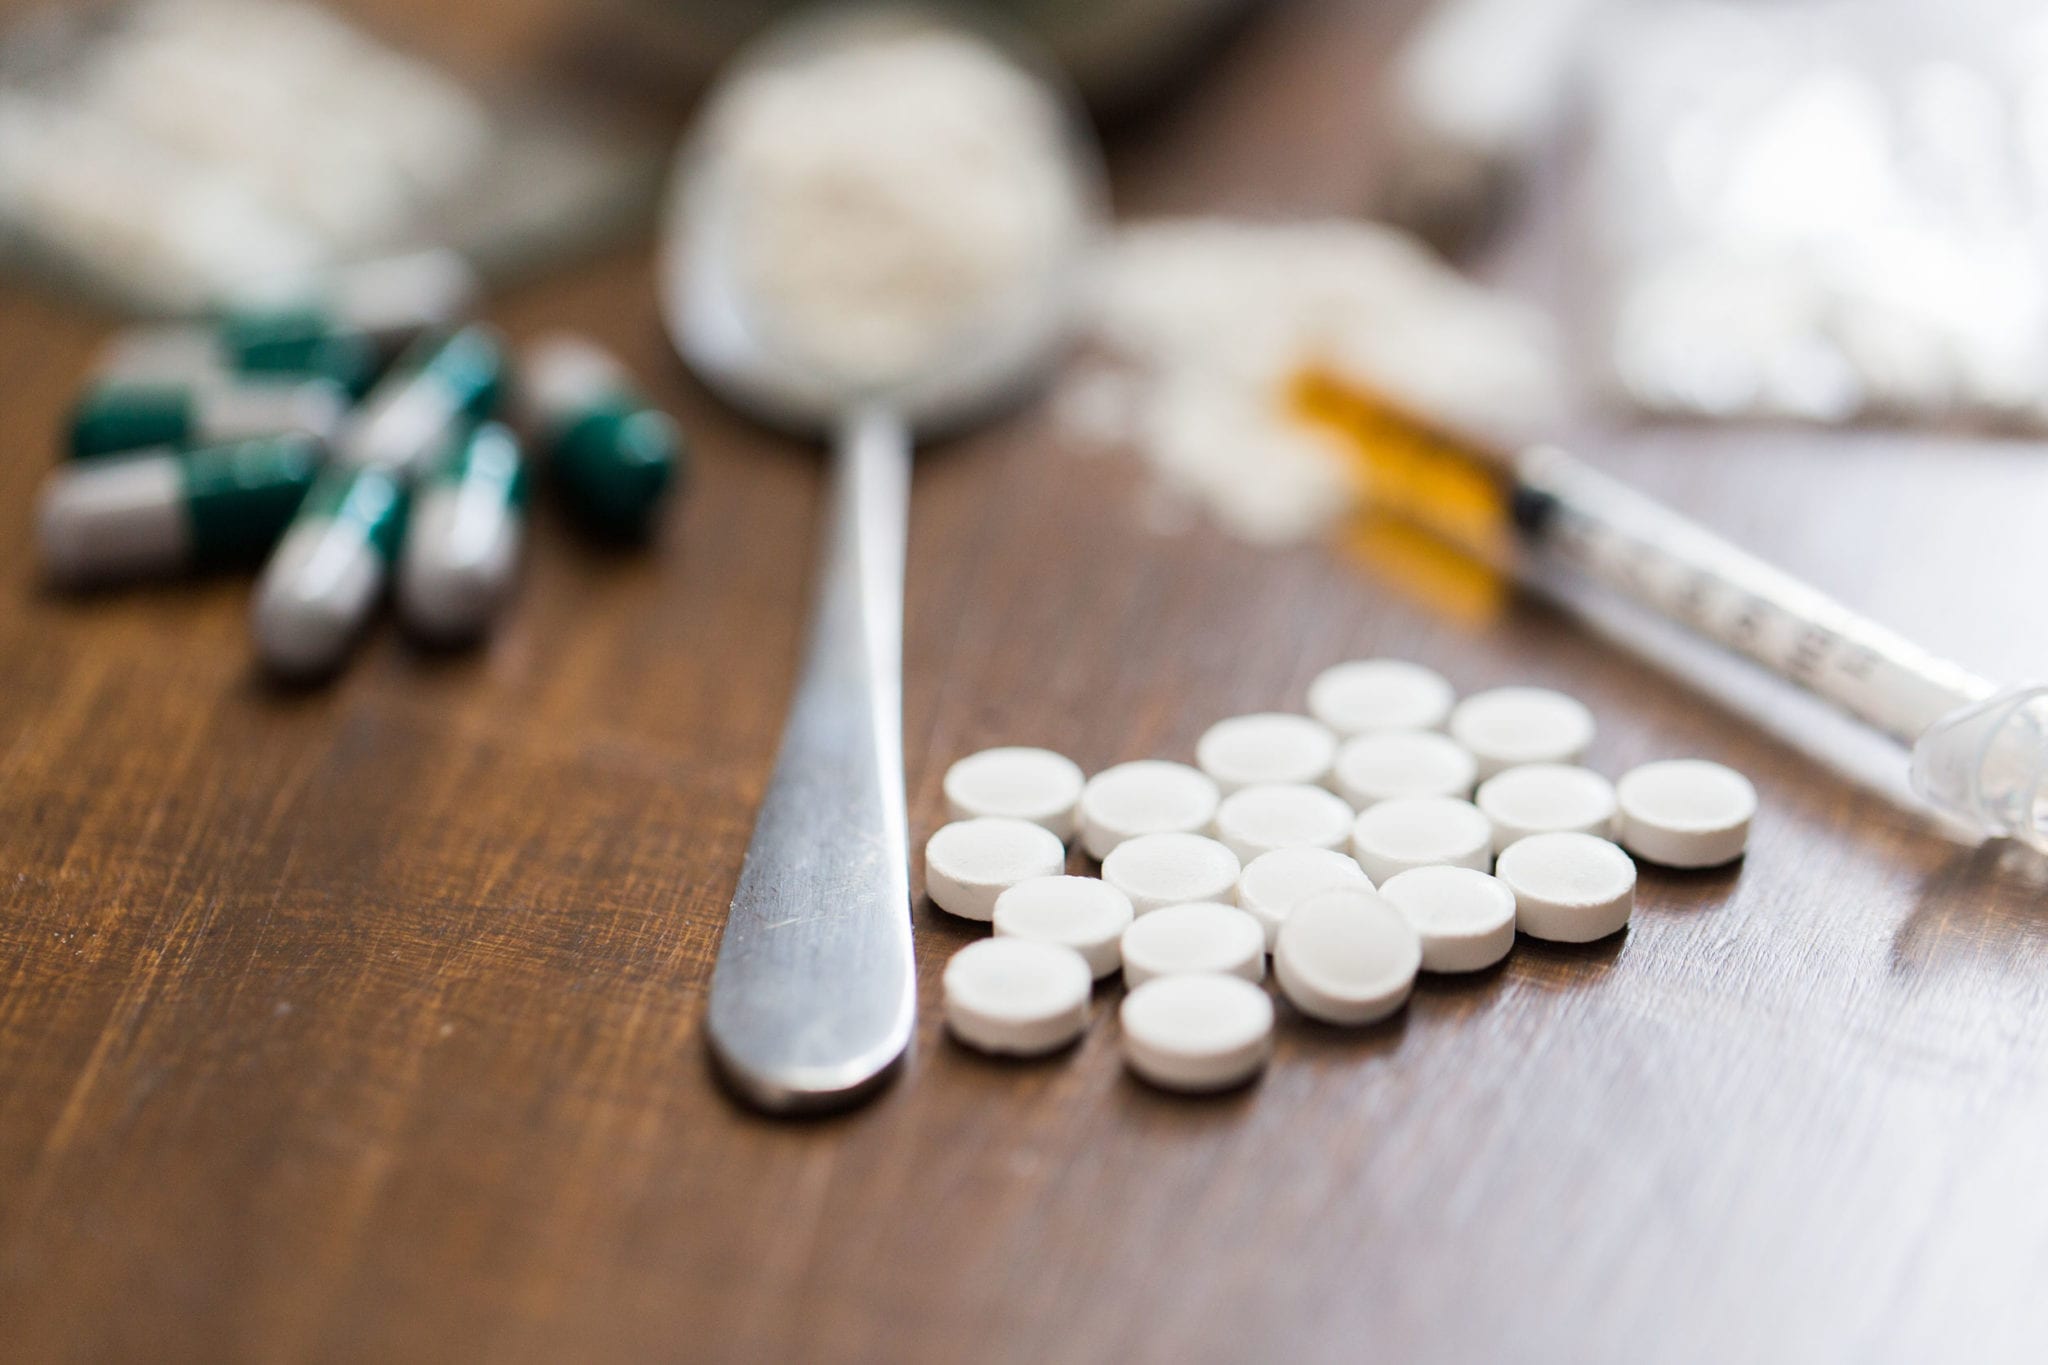 Colorado Defelonized Drug Possession, Not Drug Trafficking